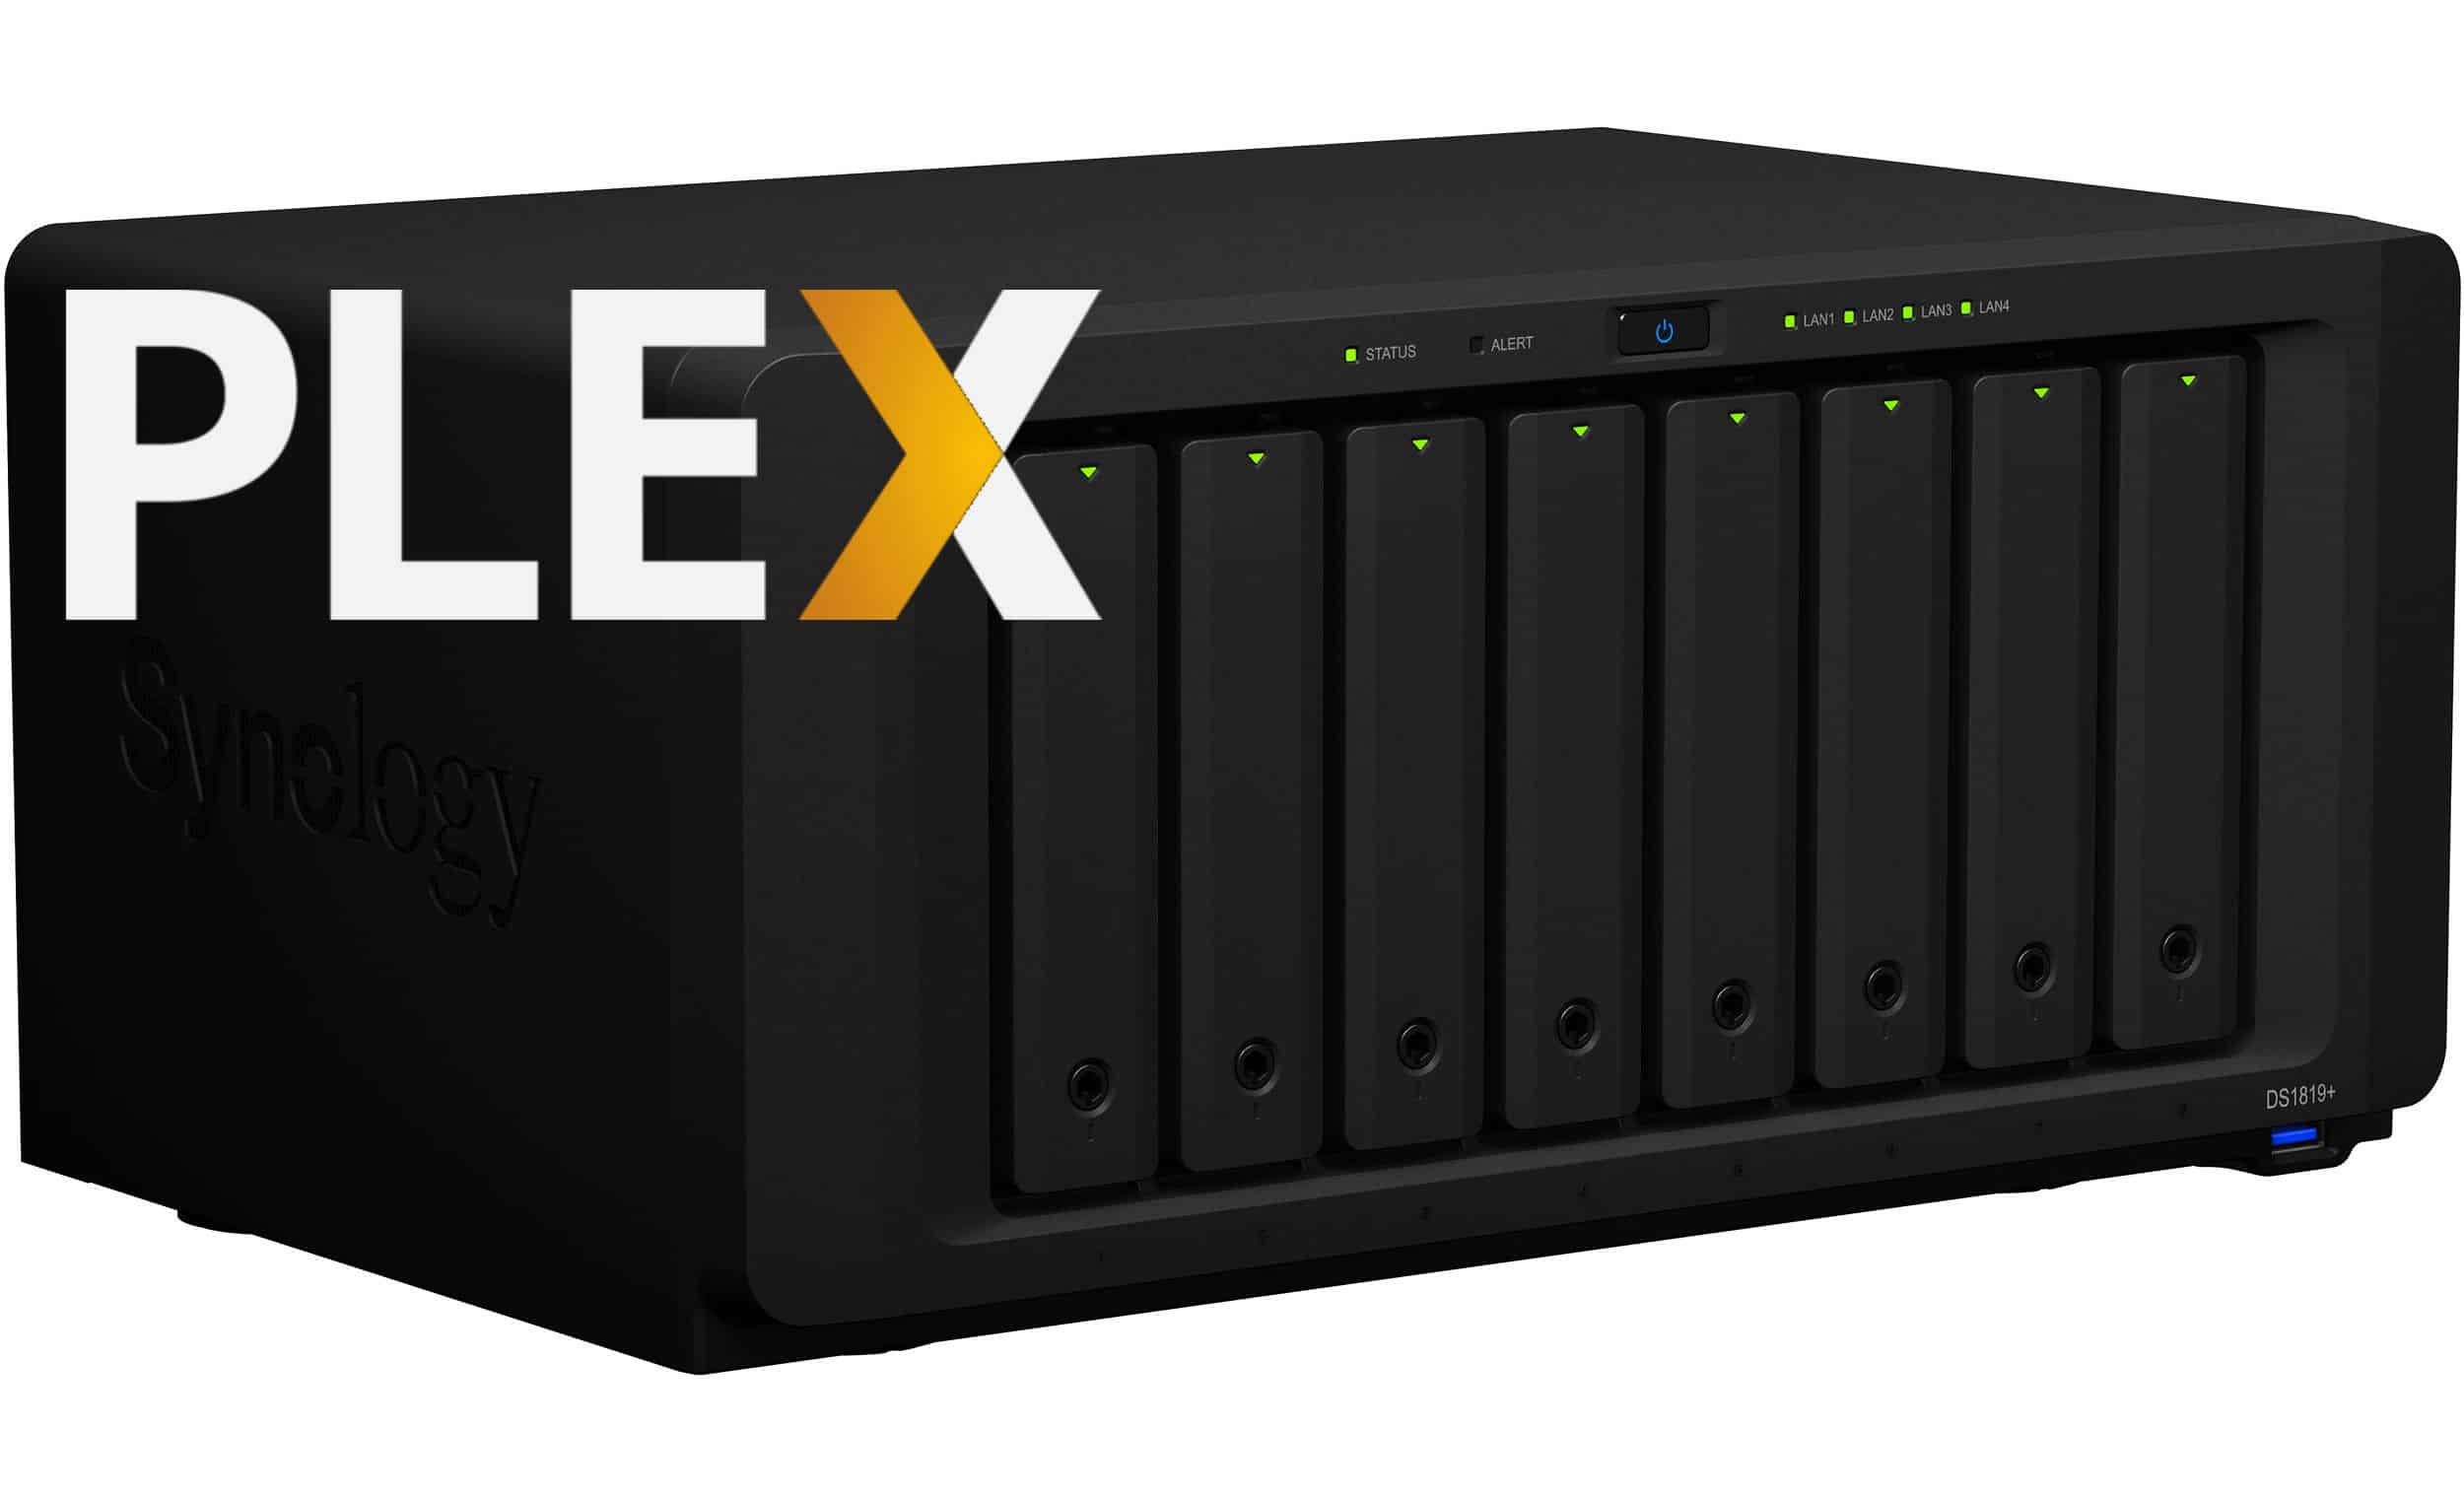 Build the ultimate PLEX server